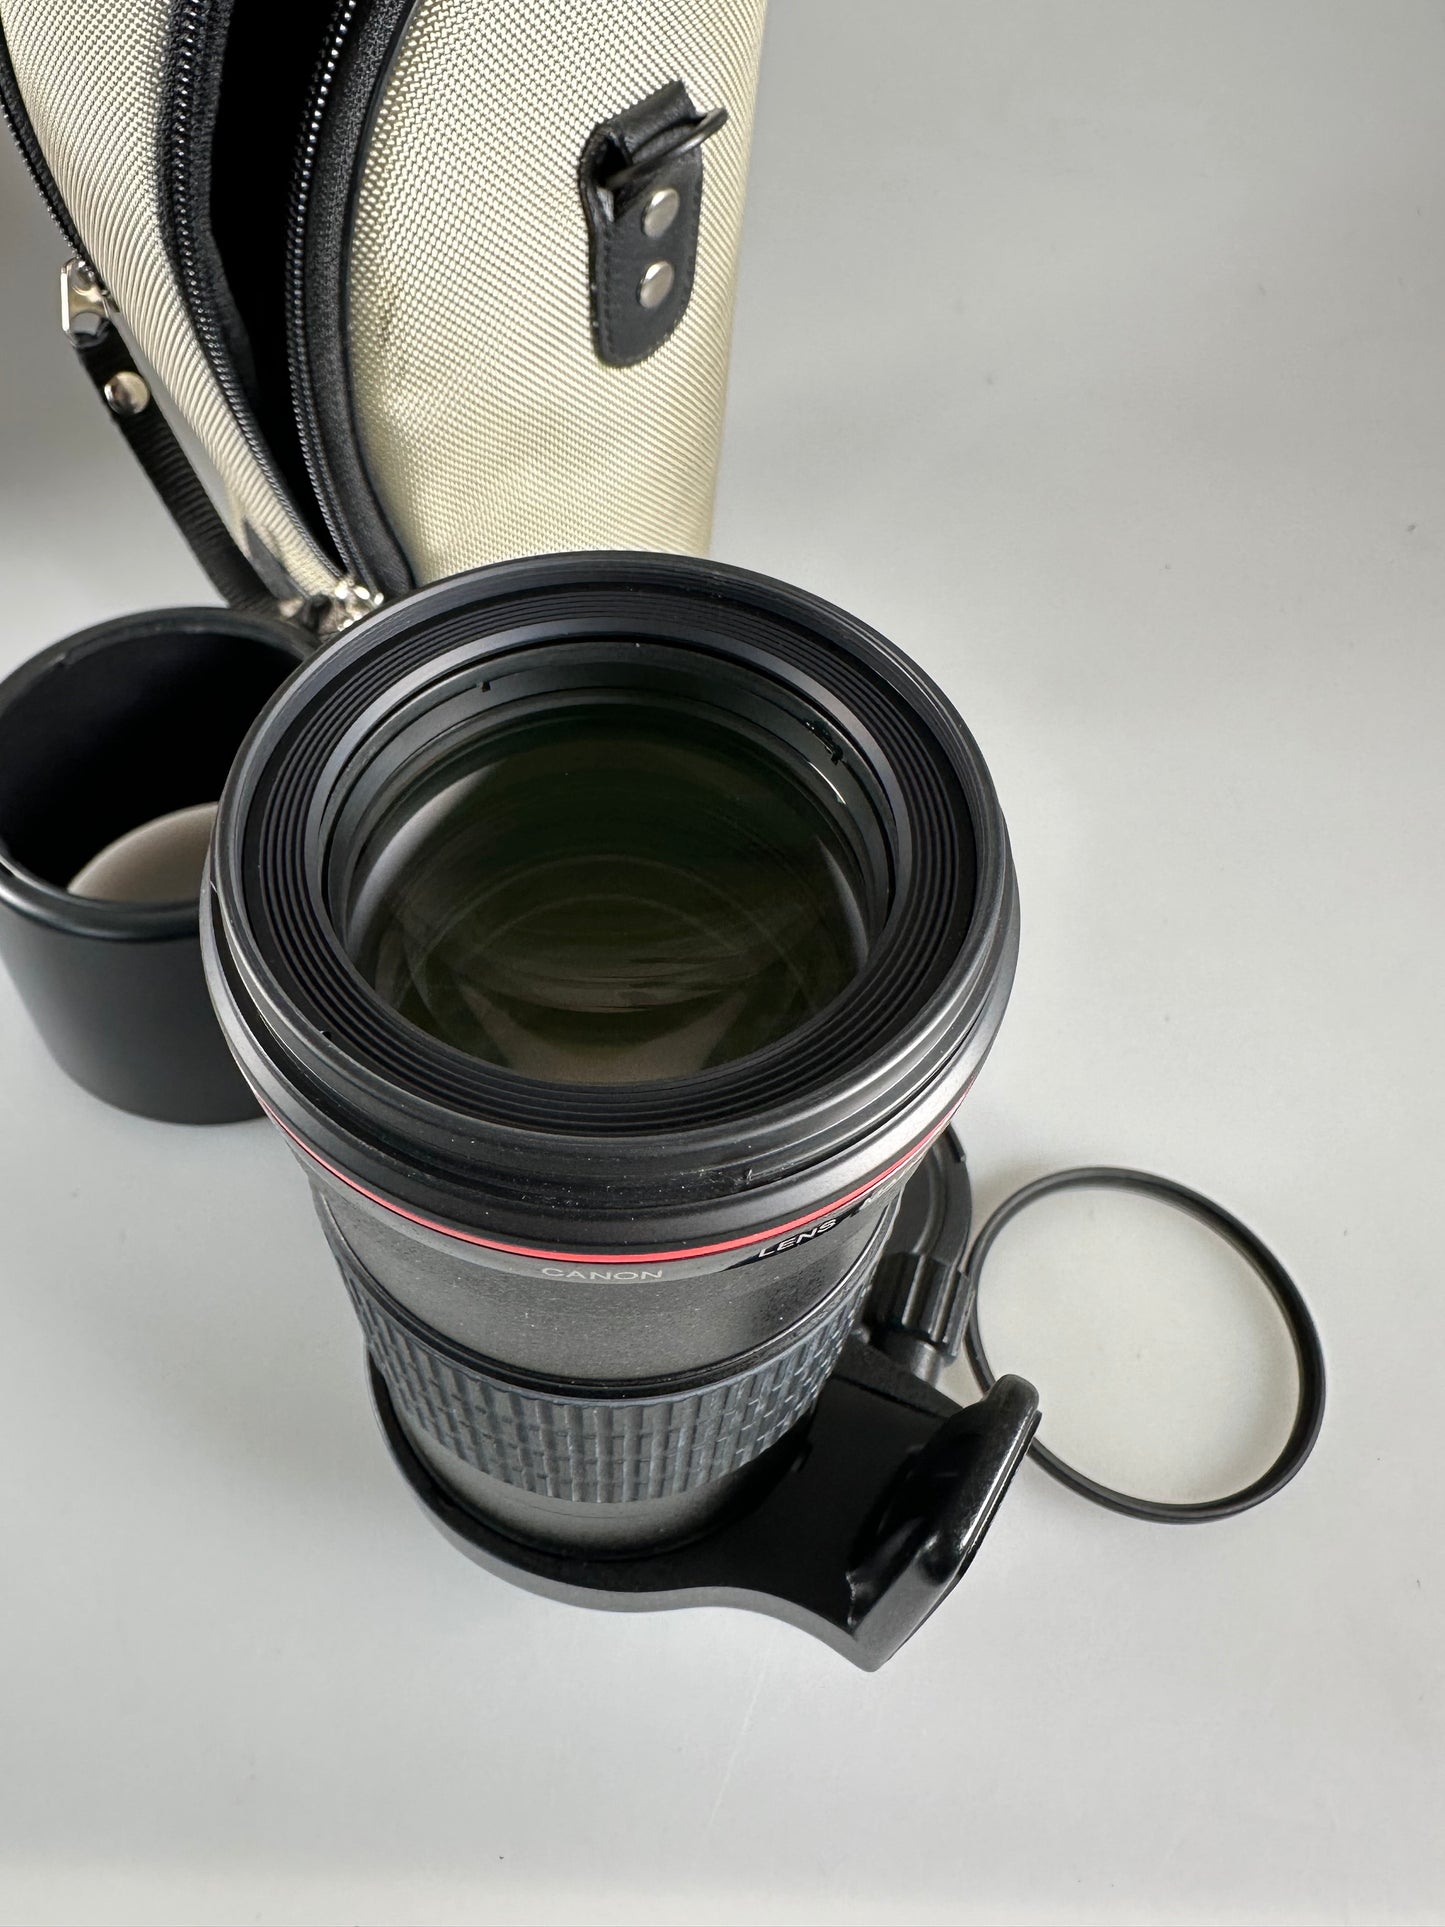 Canon EF 180mm f3.5 L Macro USM Lens